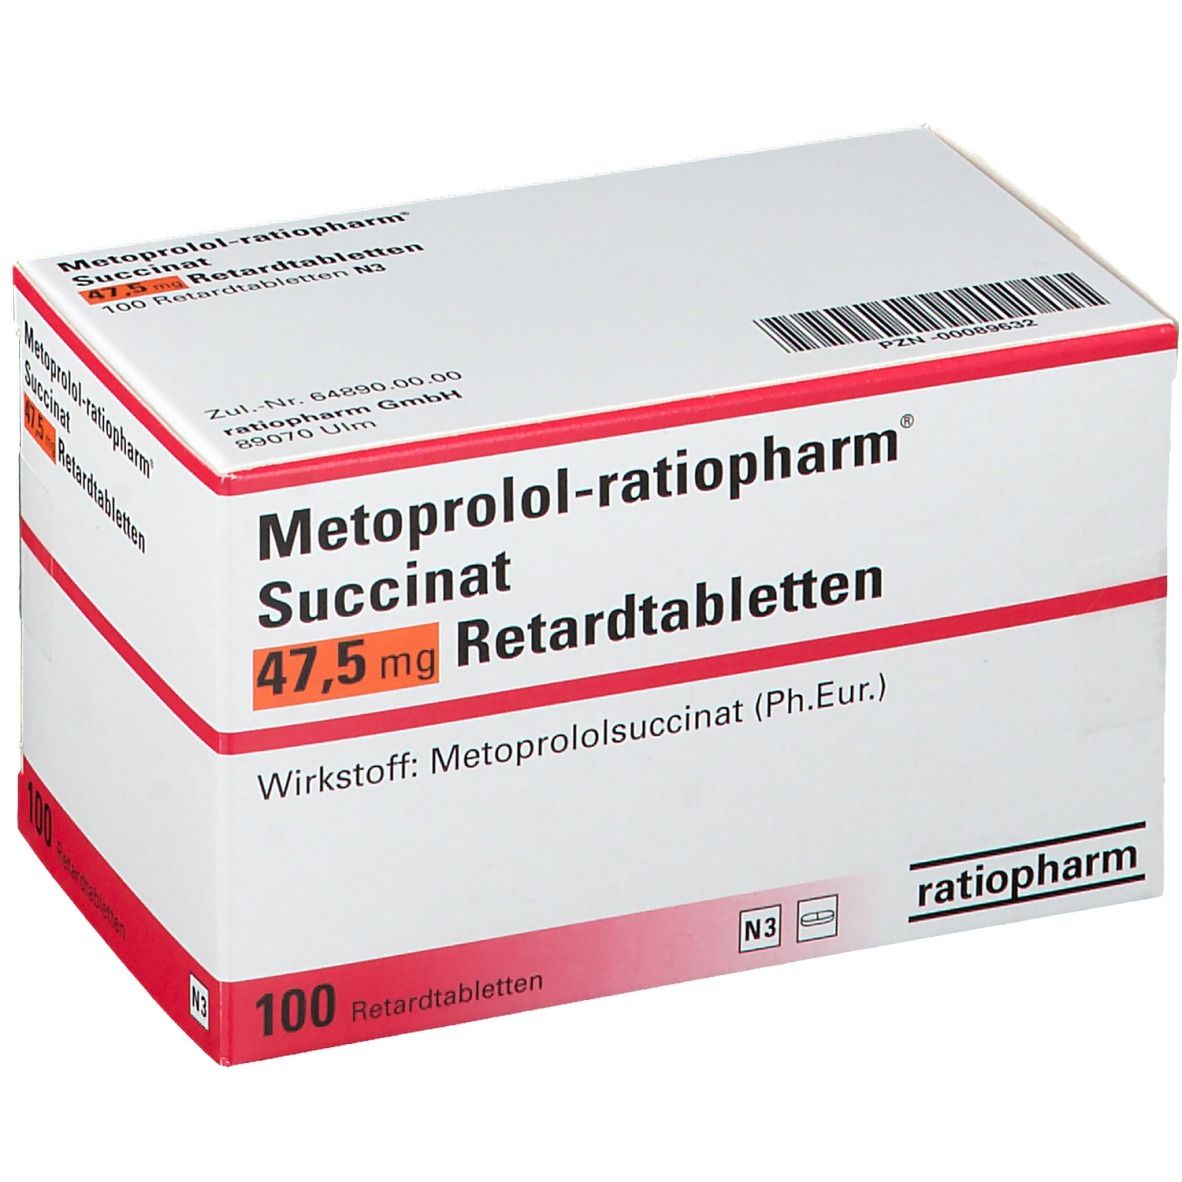 Metoprolol-ratiopharm® Succinat 47,5 mg